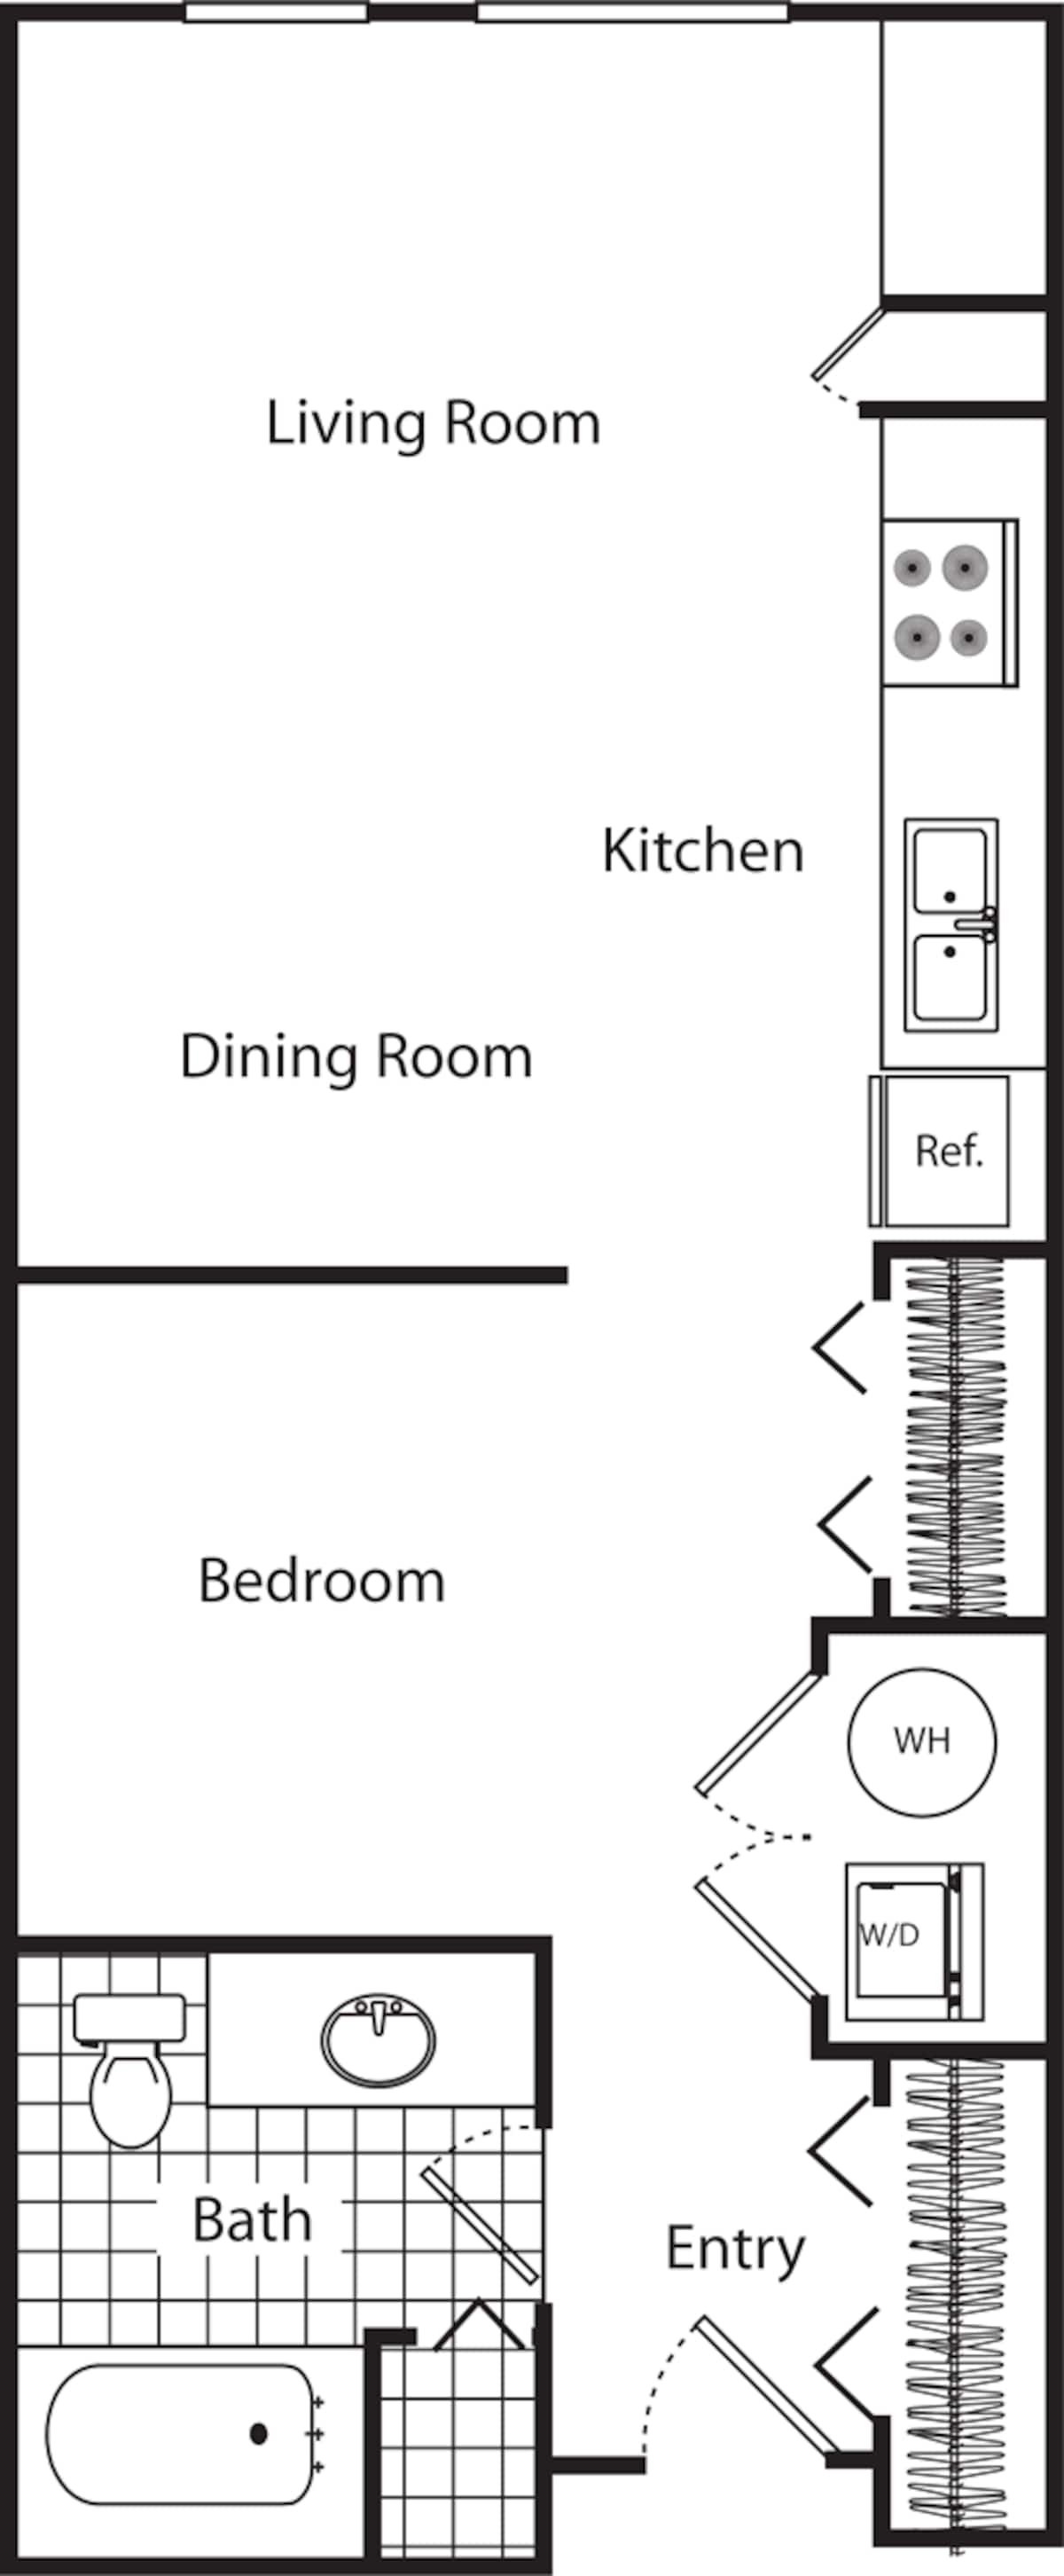 Floorplan diagram for AB D, showing Studio